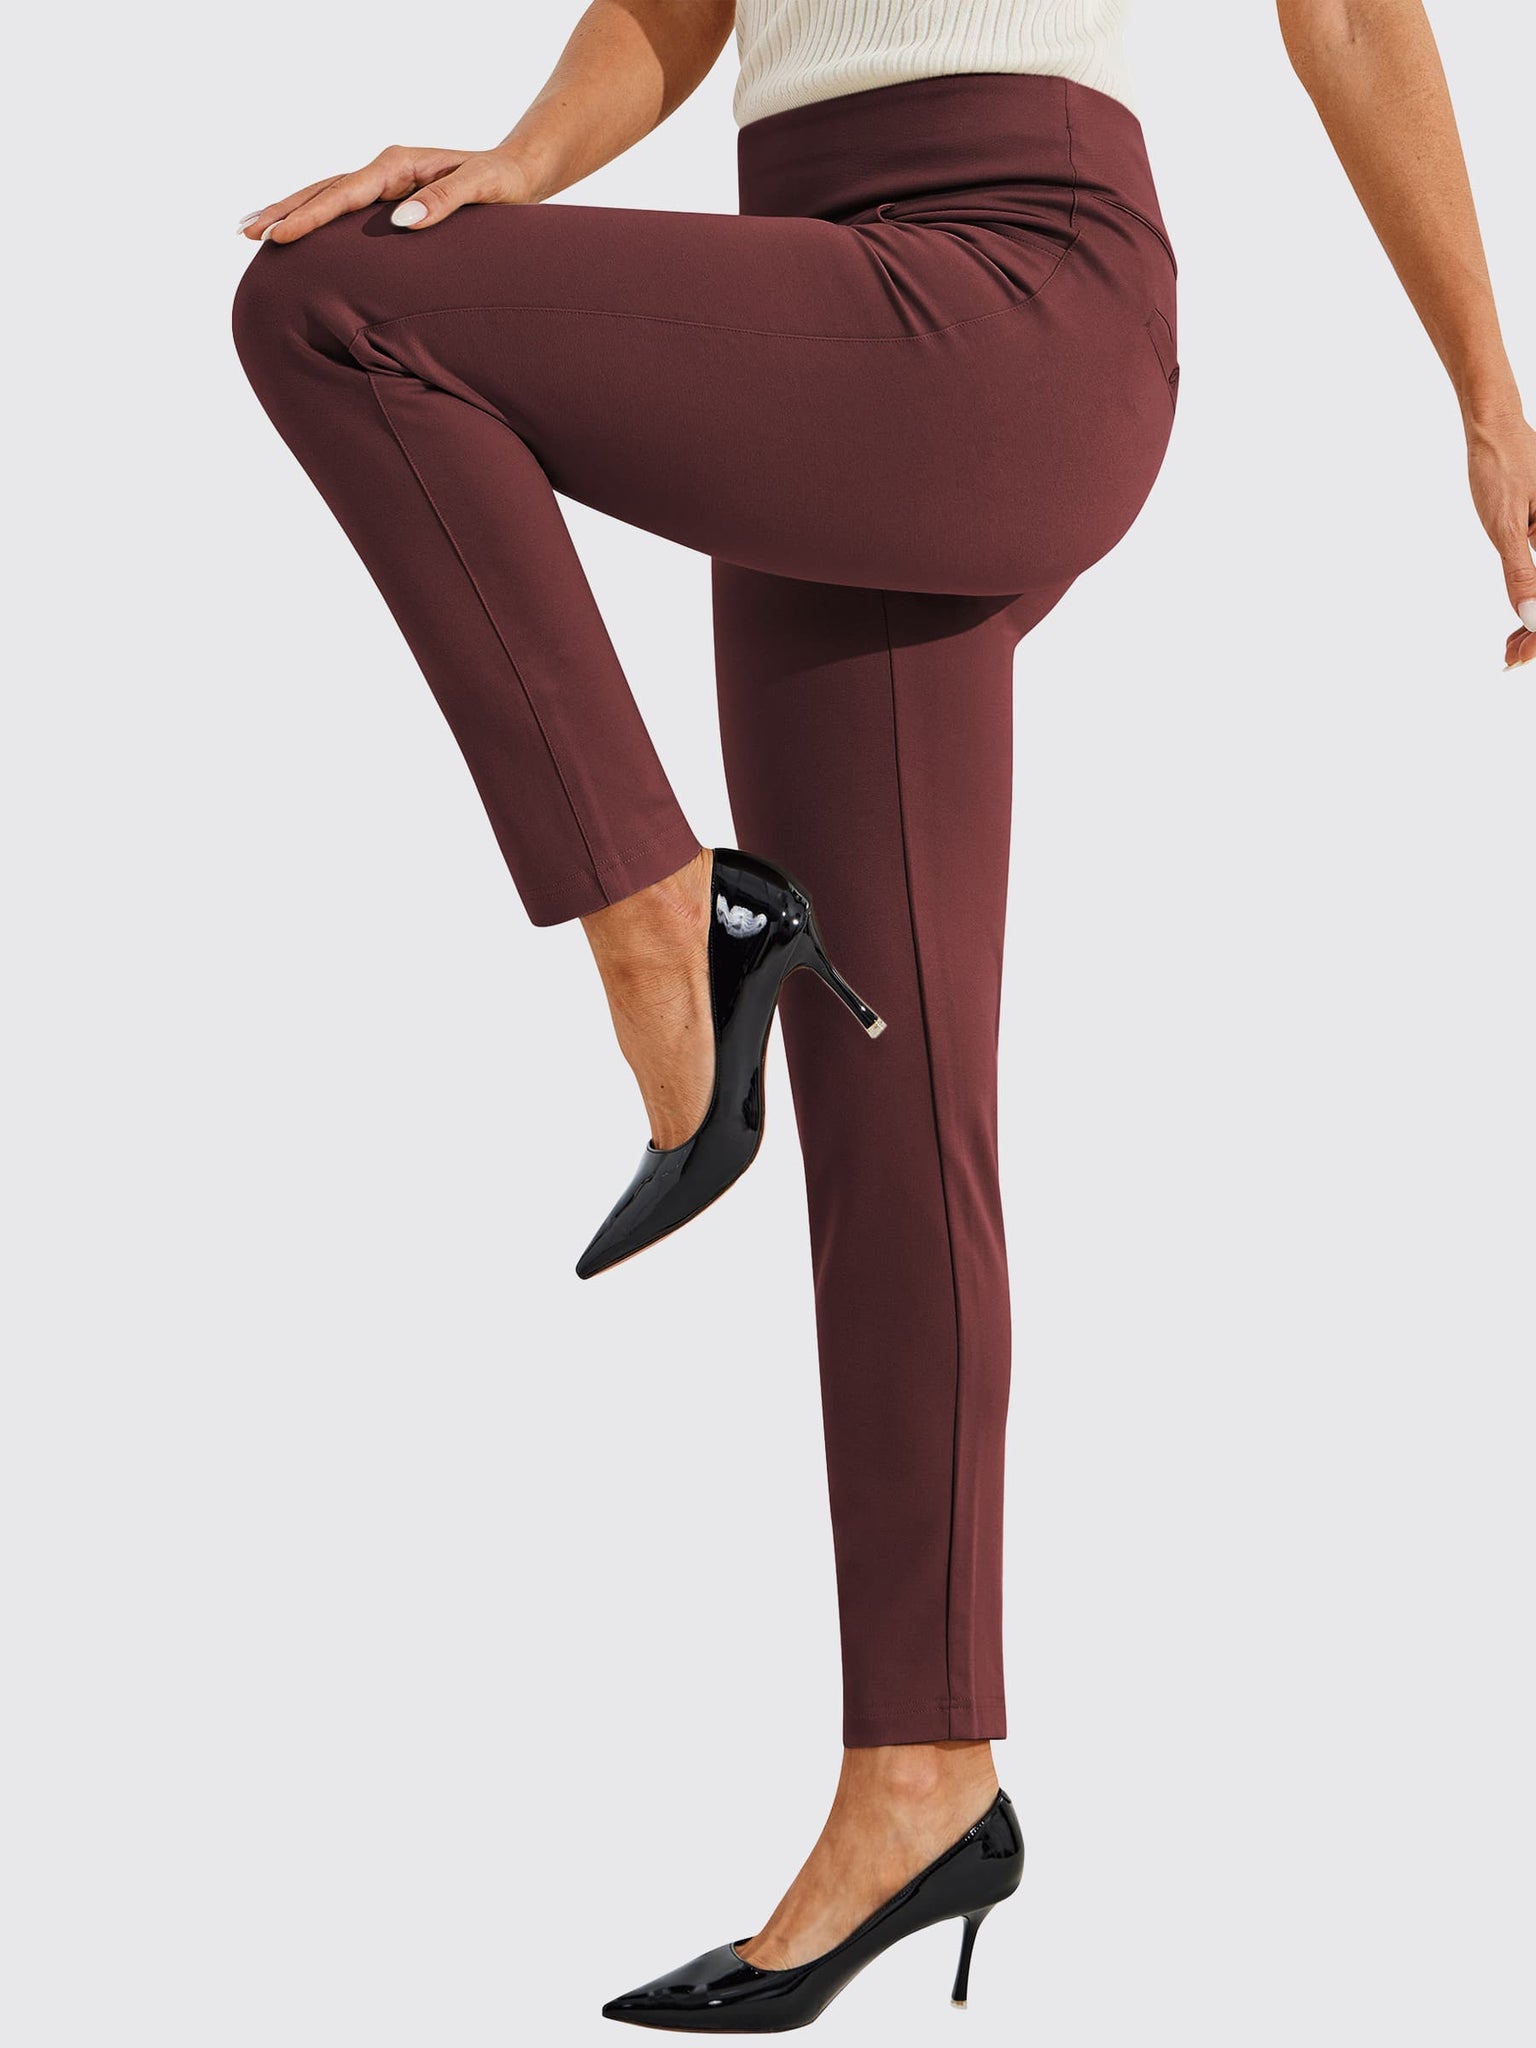 Women's Yoga pants (wine) – wodarmour